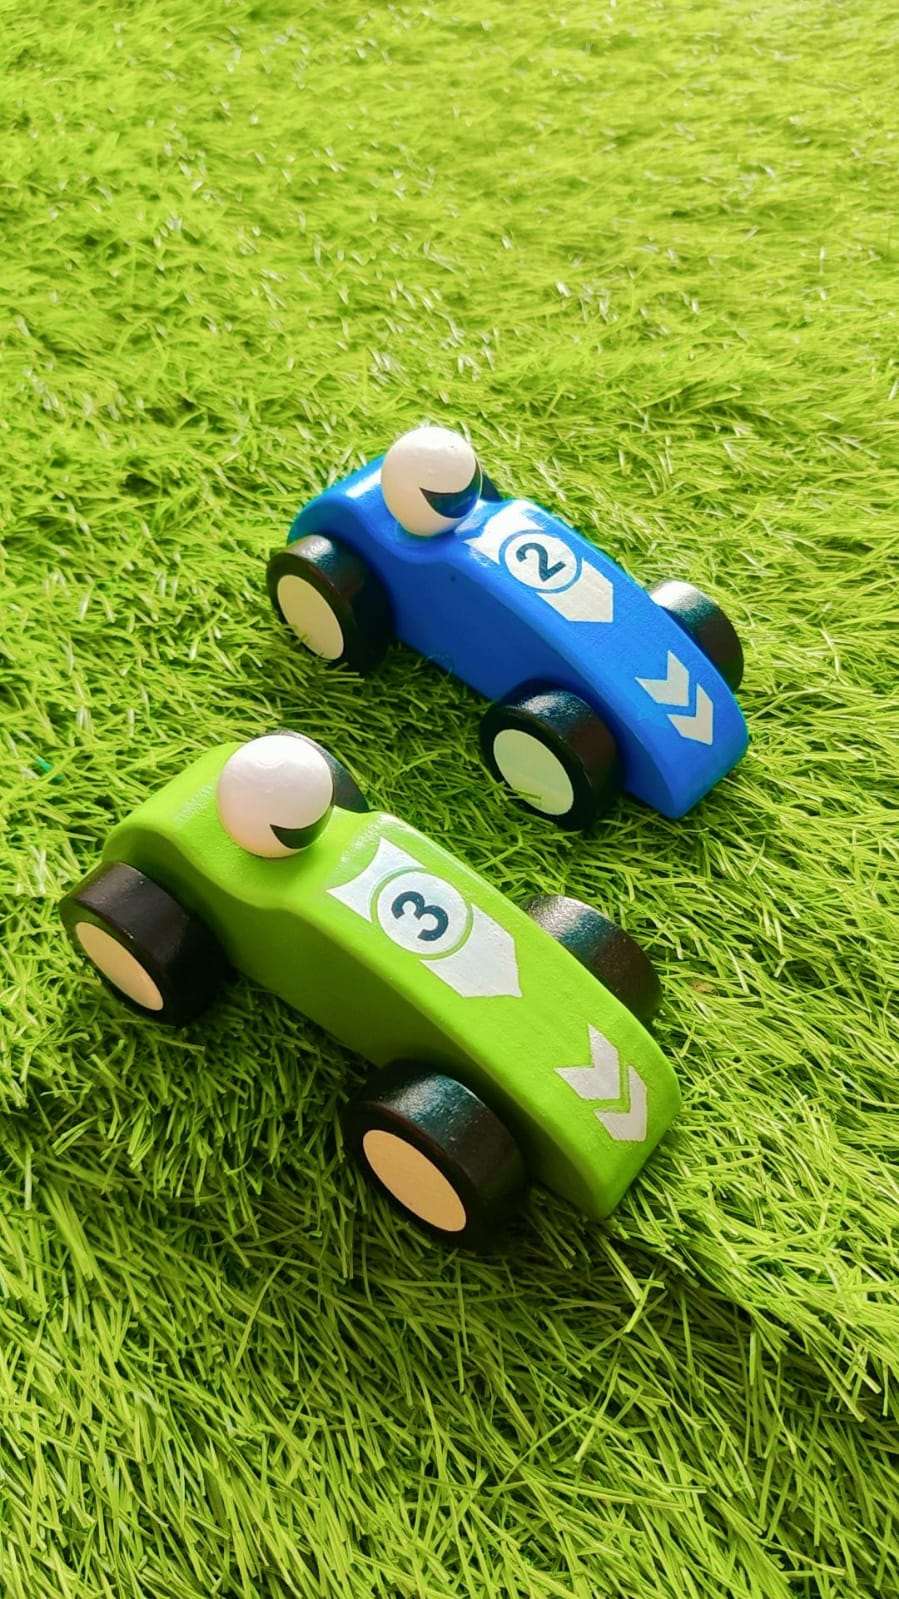 Race Car Push Toy (1 pc)